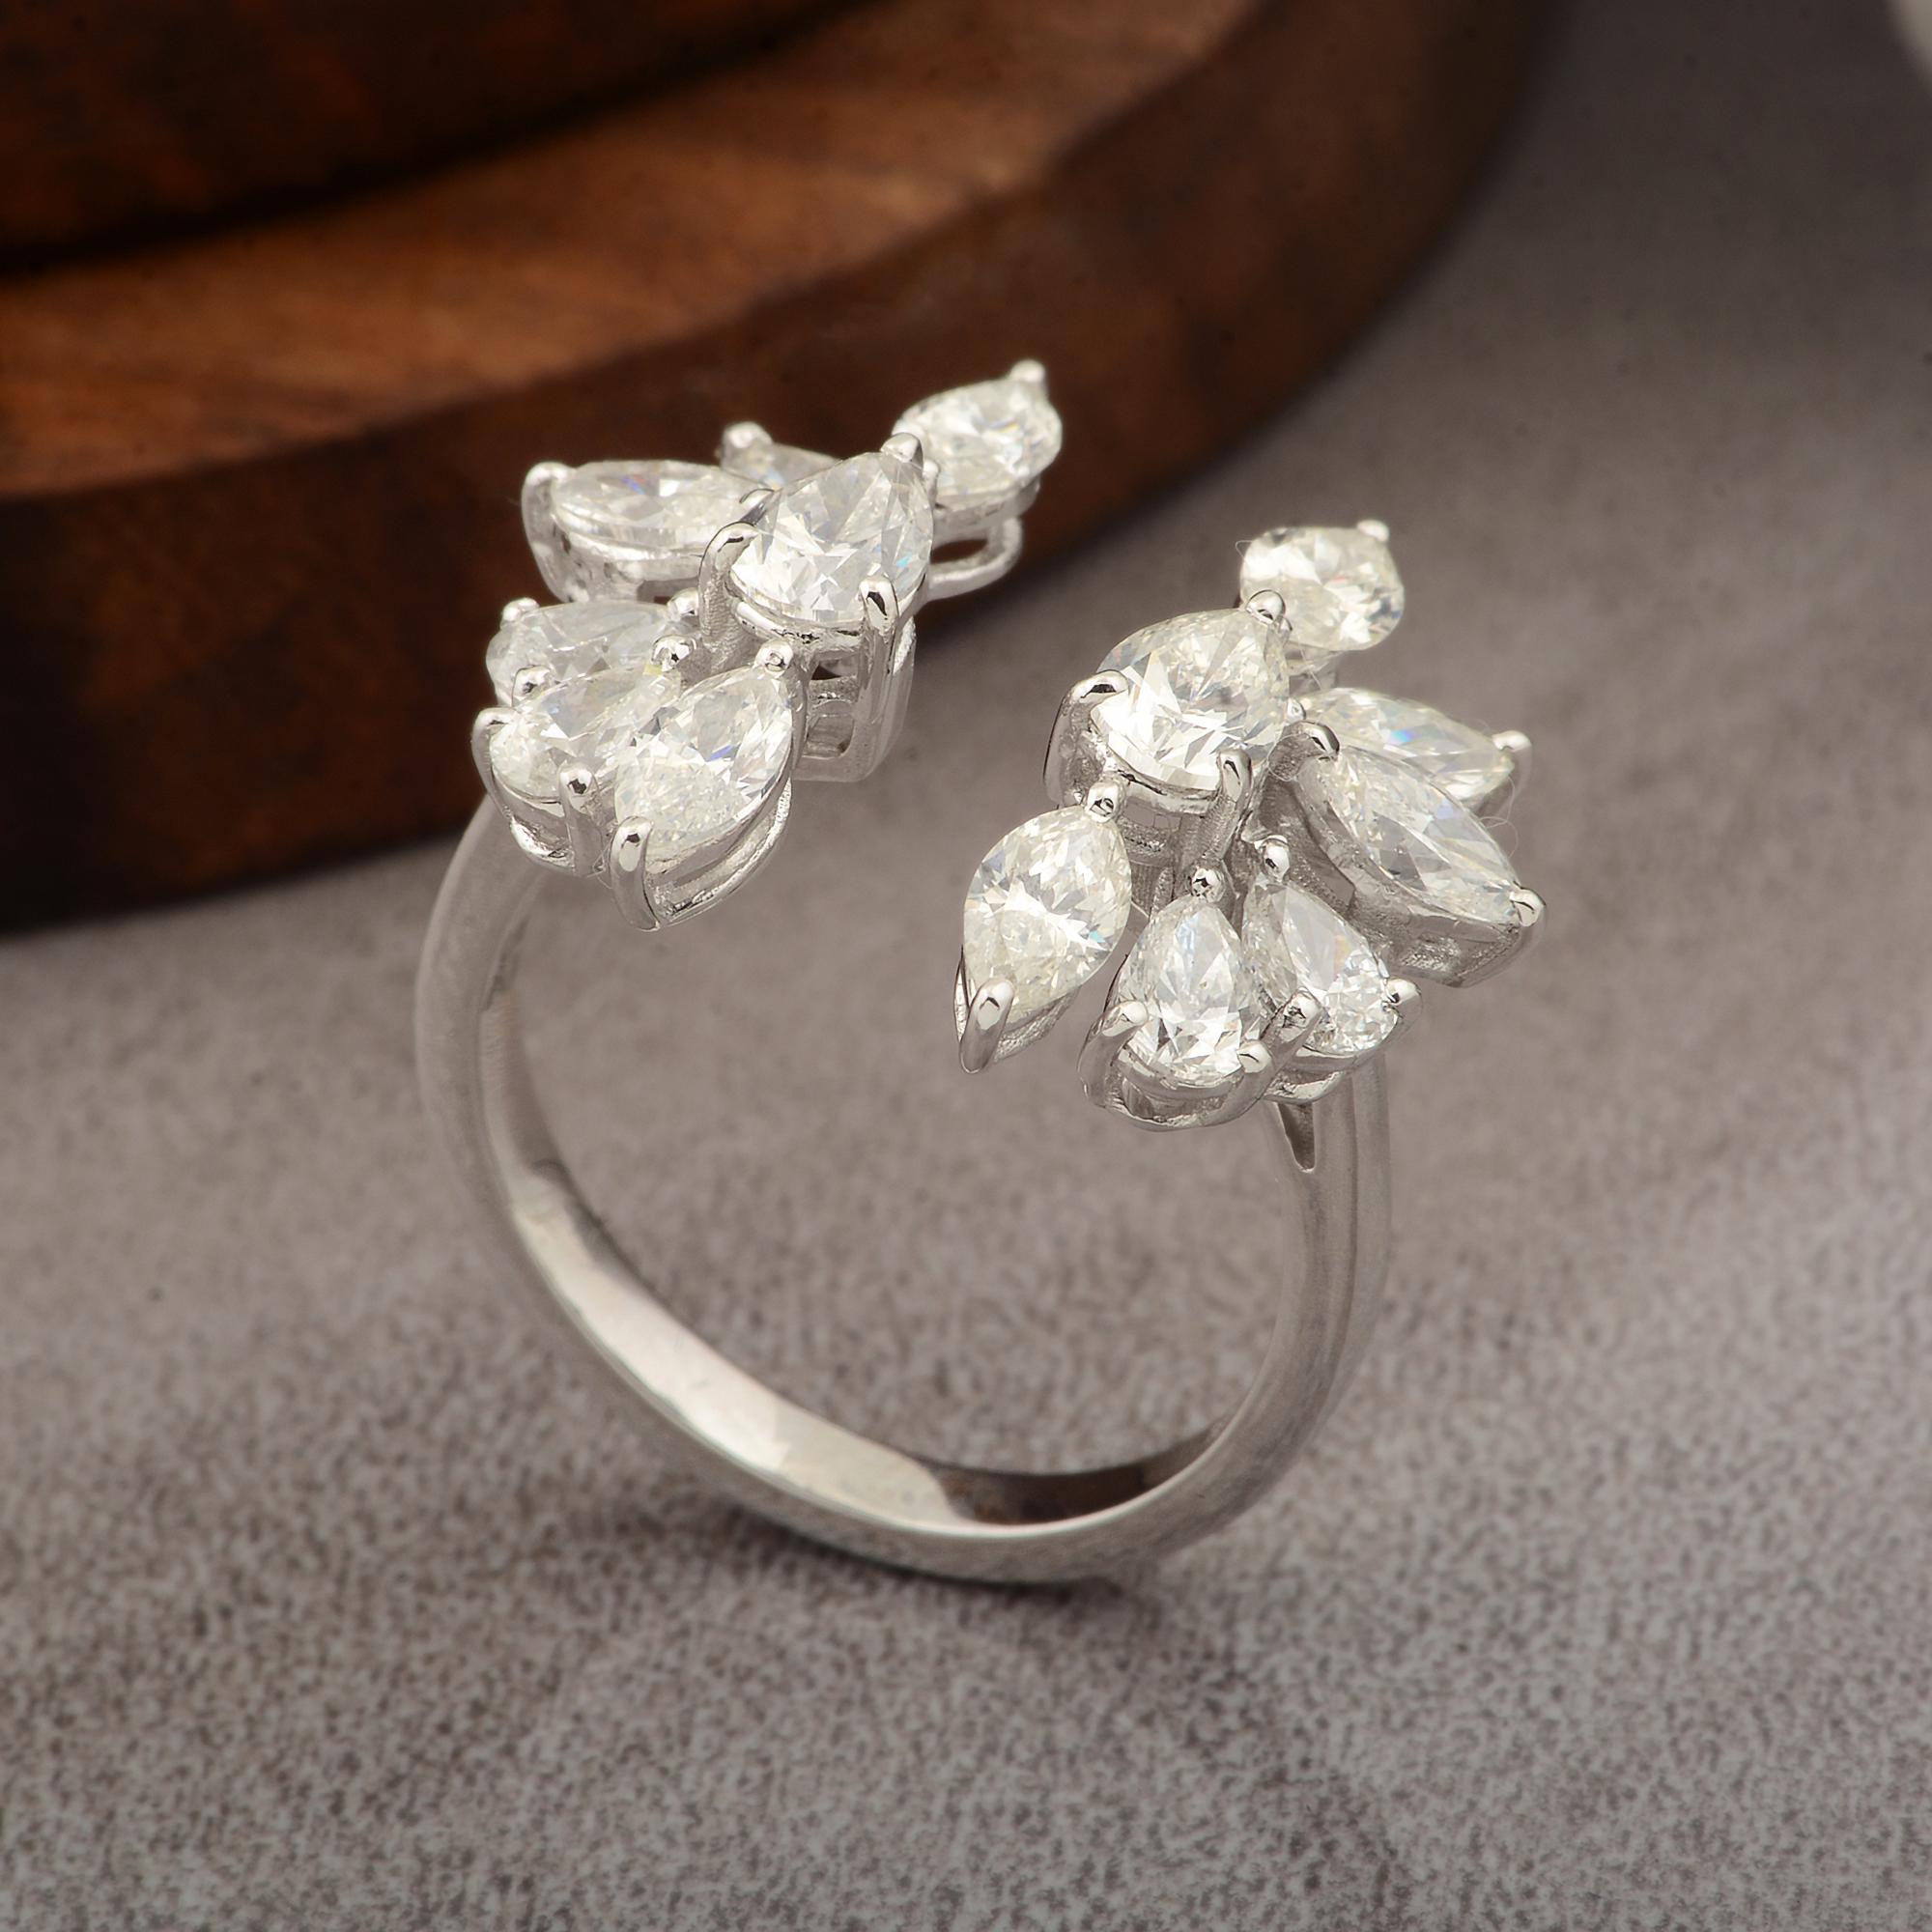 For Sale:  2.6 Carat Pear & Marquise Diamond Cuff Ring 18 Karat White Gold Handmade Jewelry 5